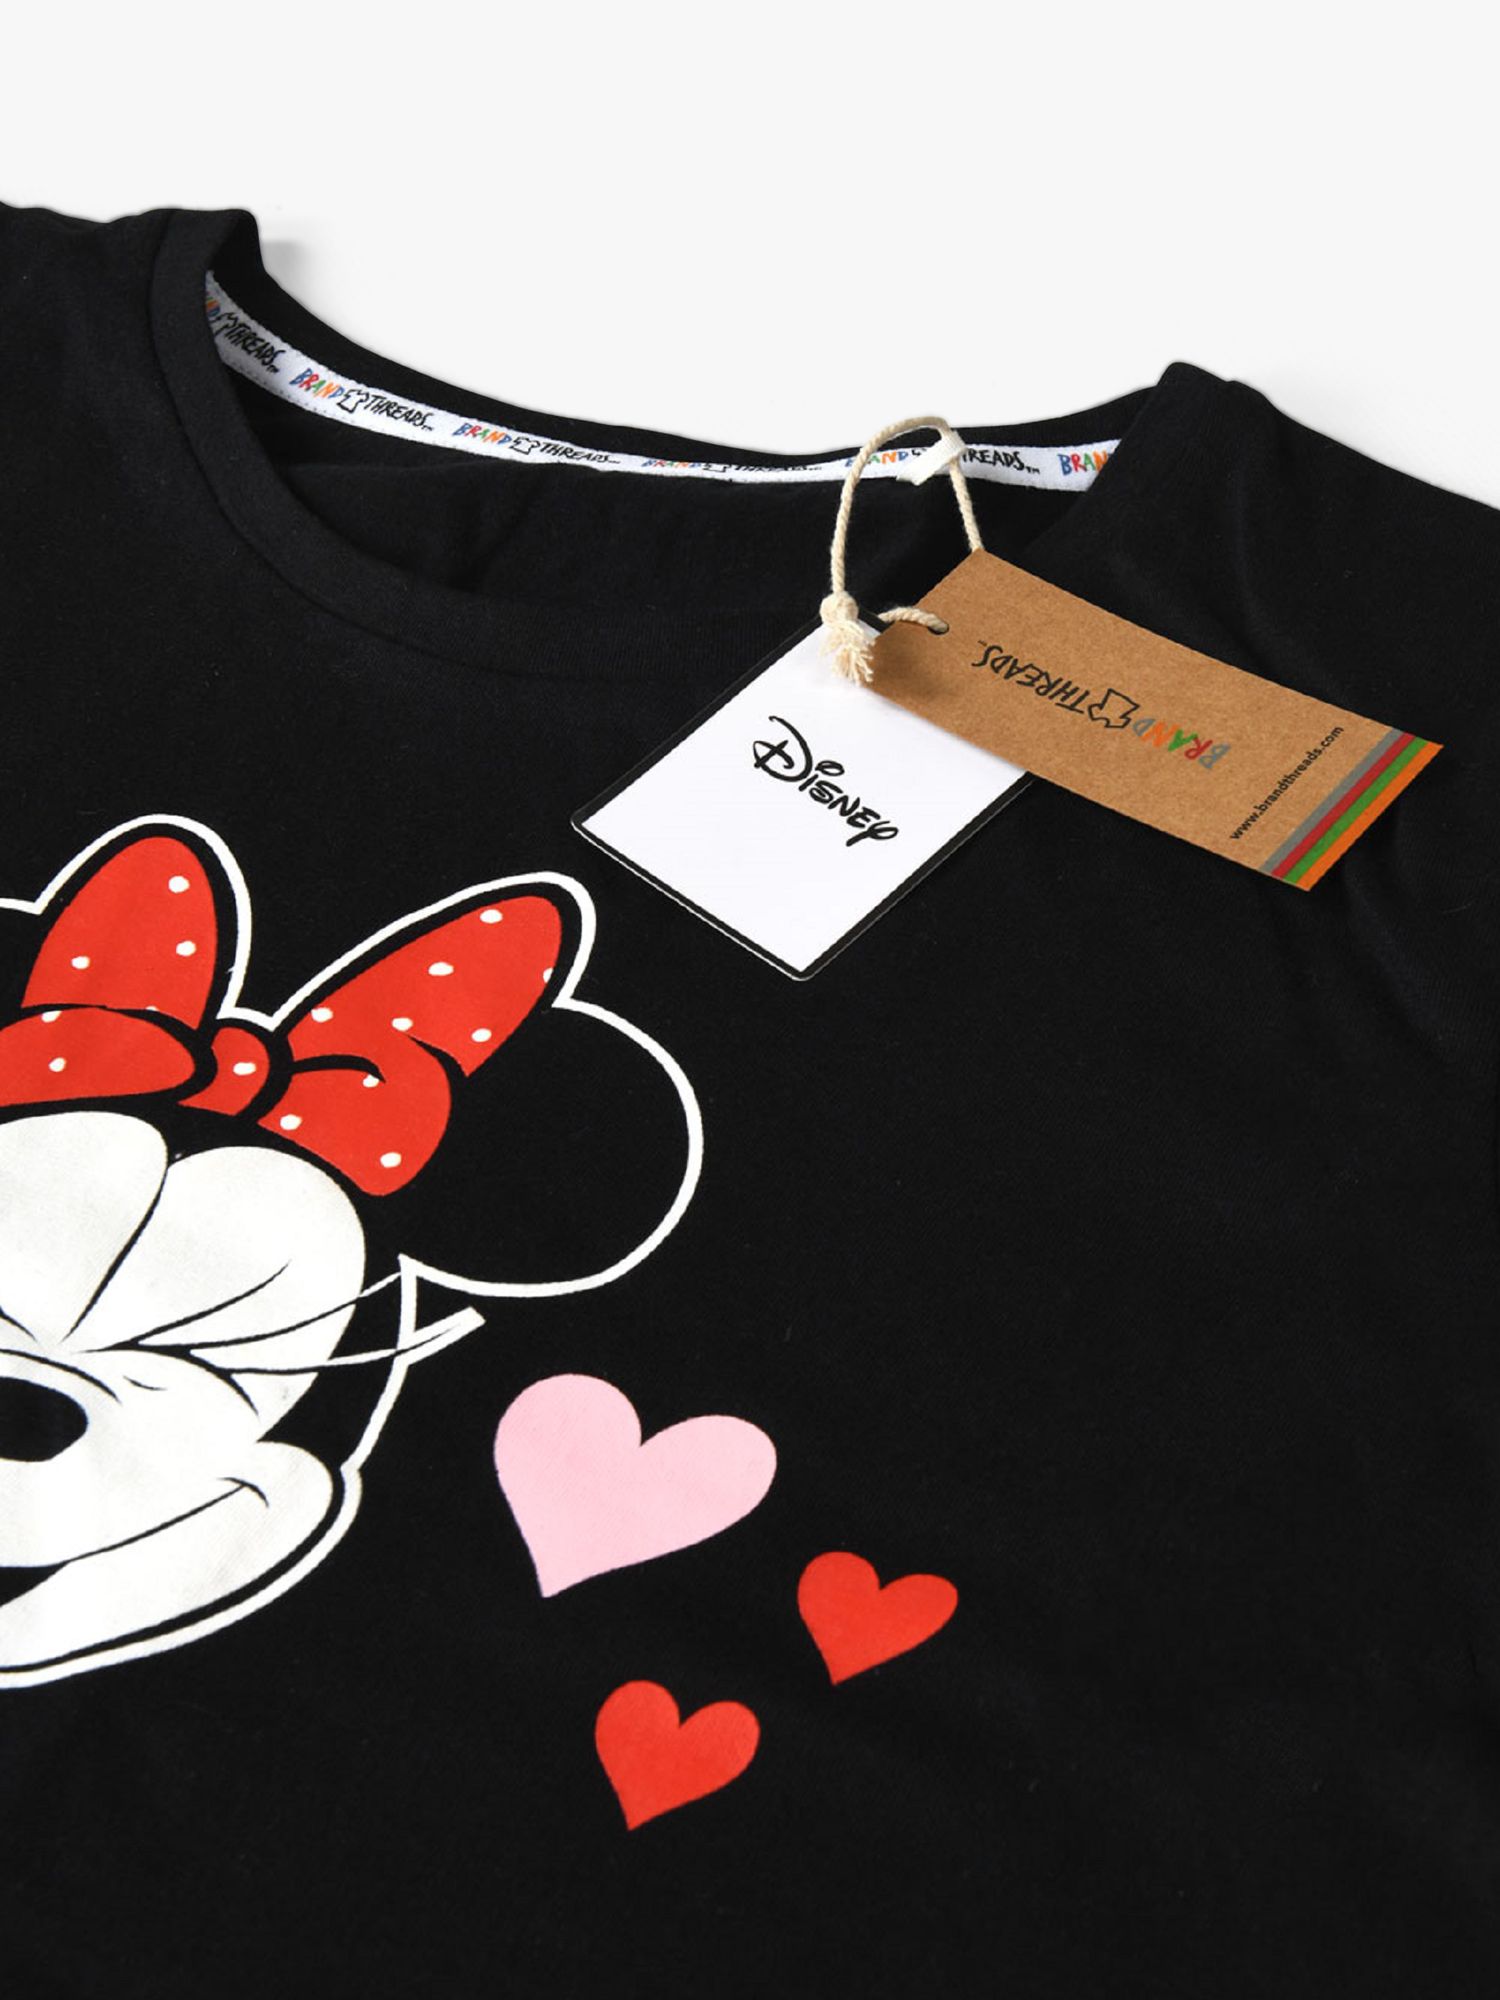 Buy Brand Threads White Ladies Official Disney Mickey Mouse Organic Cotton  White Sweatshirt Sizes XS-XL from Next Poland